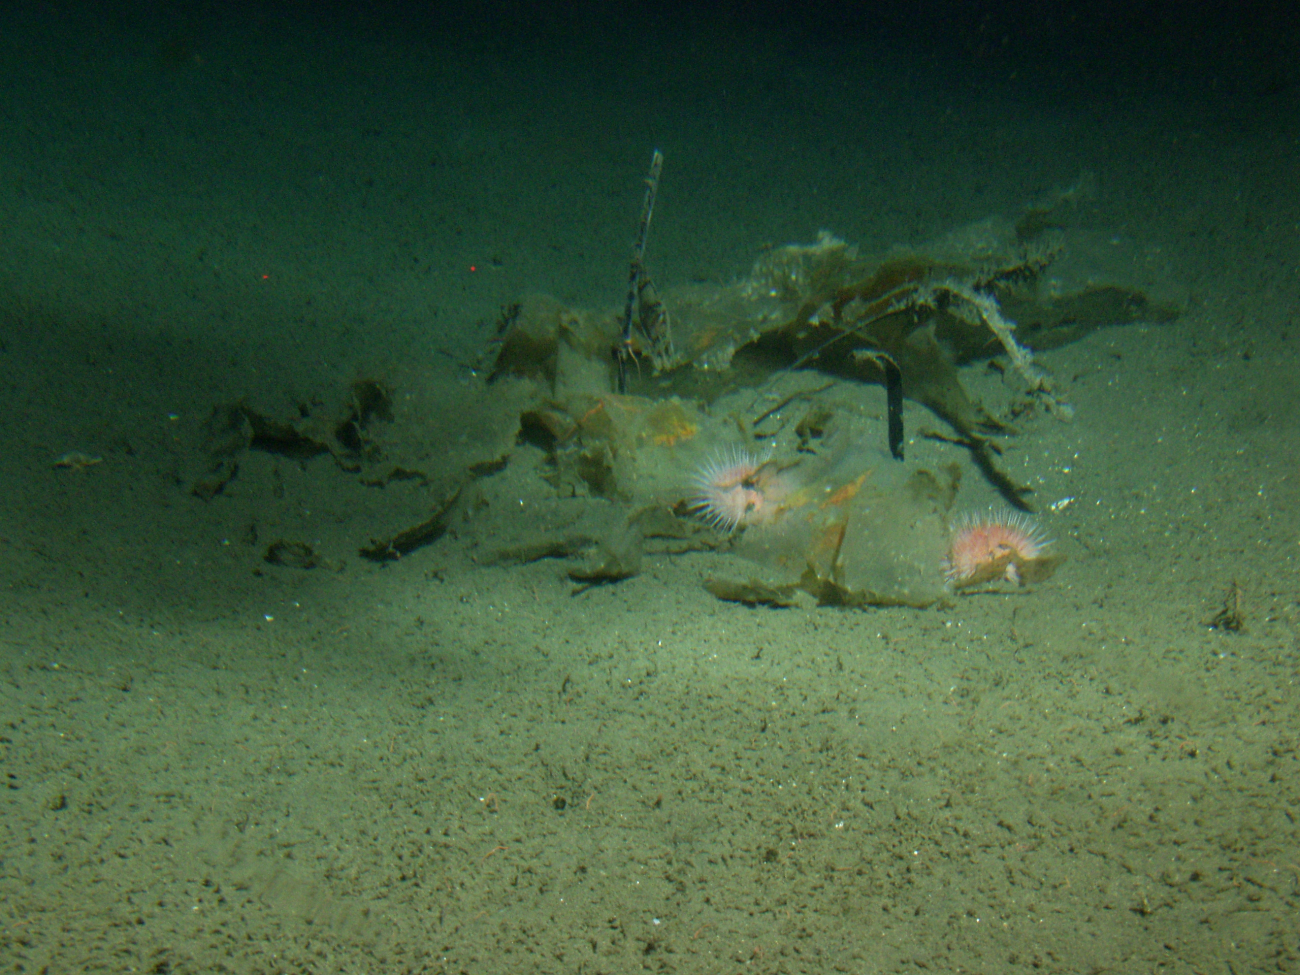 Urchins (Strongylocentrotus franciscanus) feeding on drift algaeat 150 meters depth